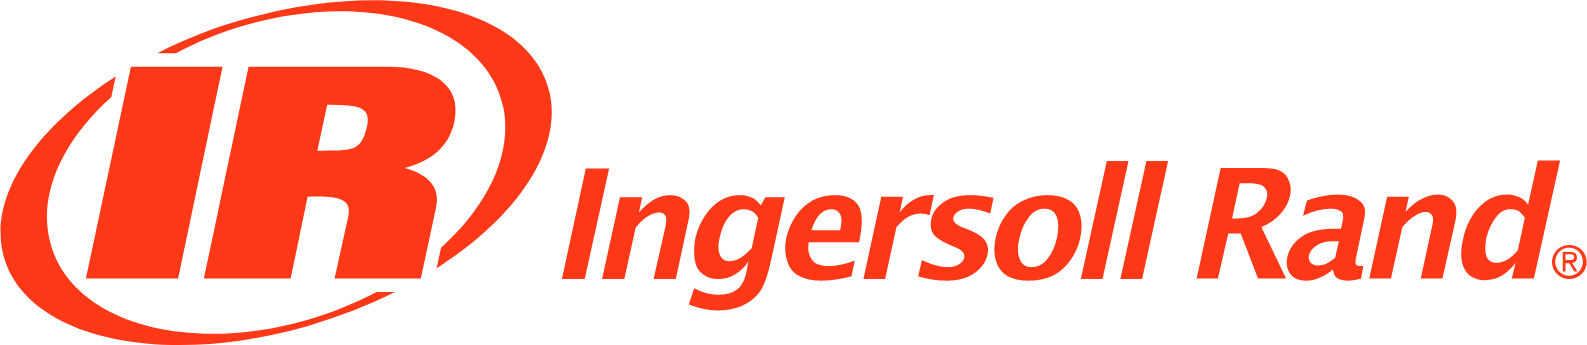 Ingersoll Rand logo large (transparent PNG)